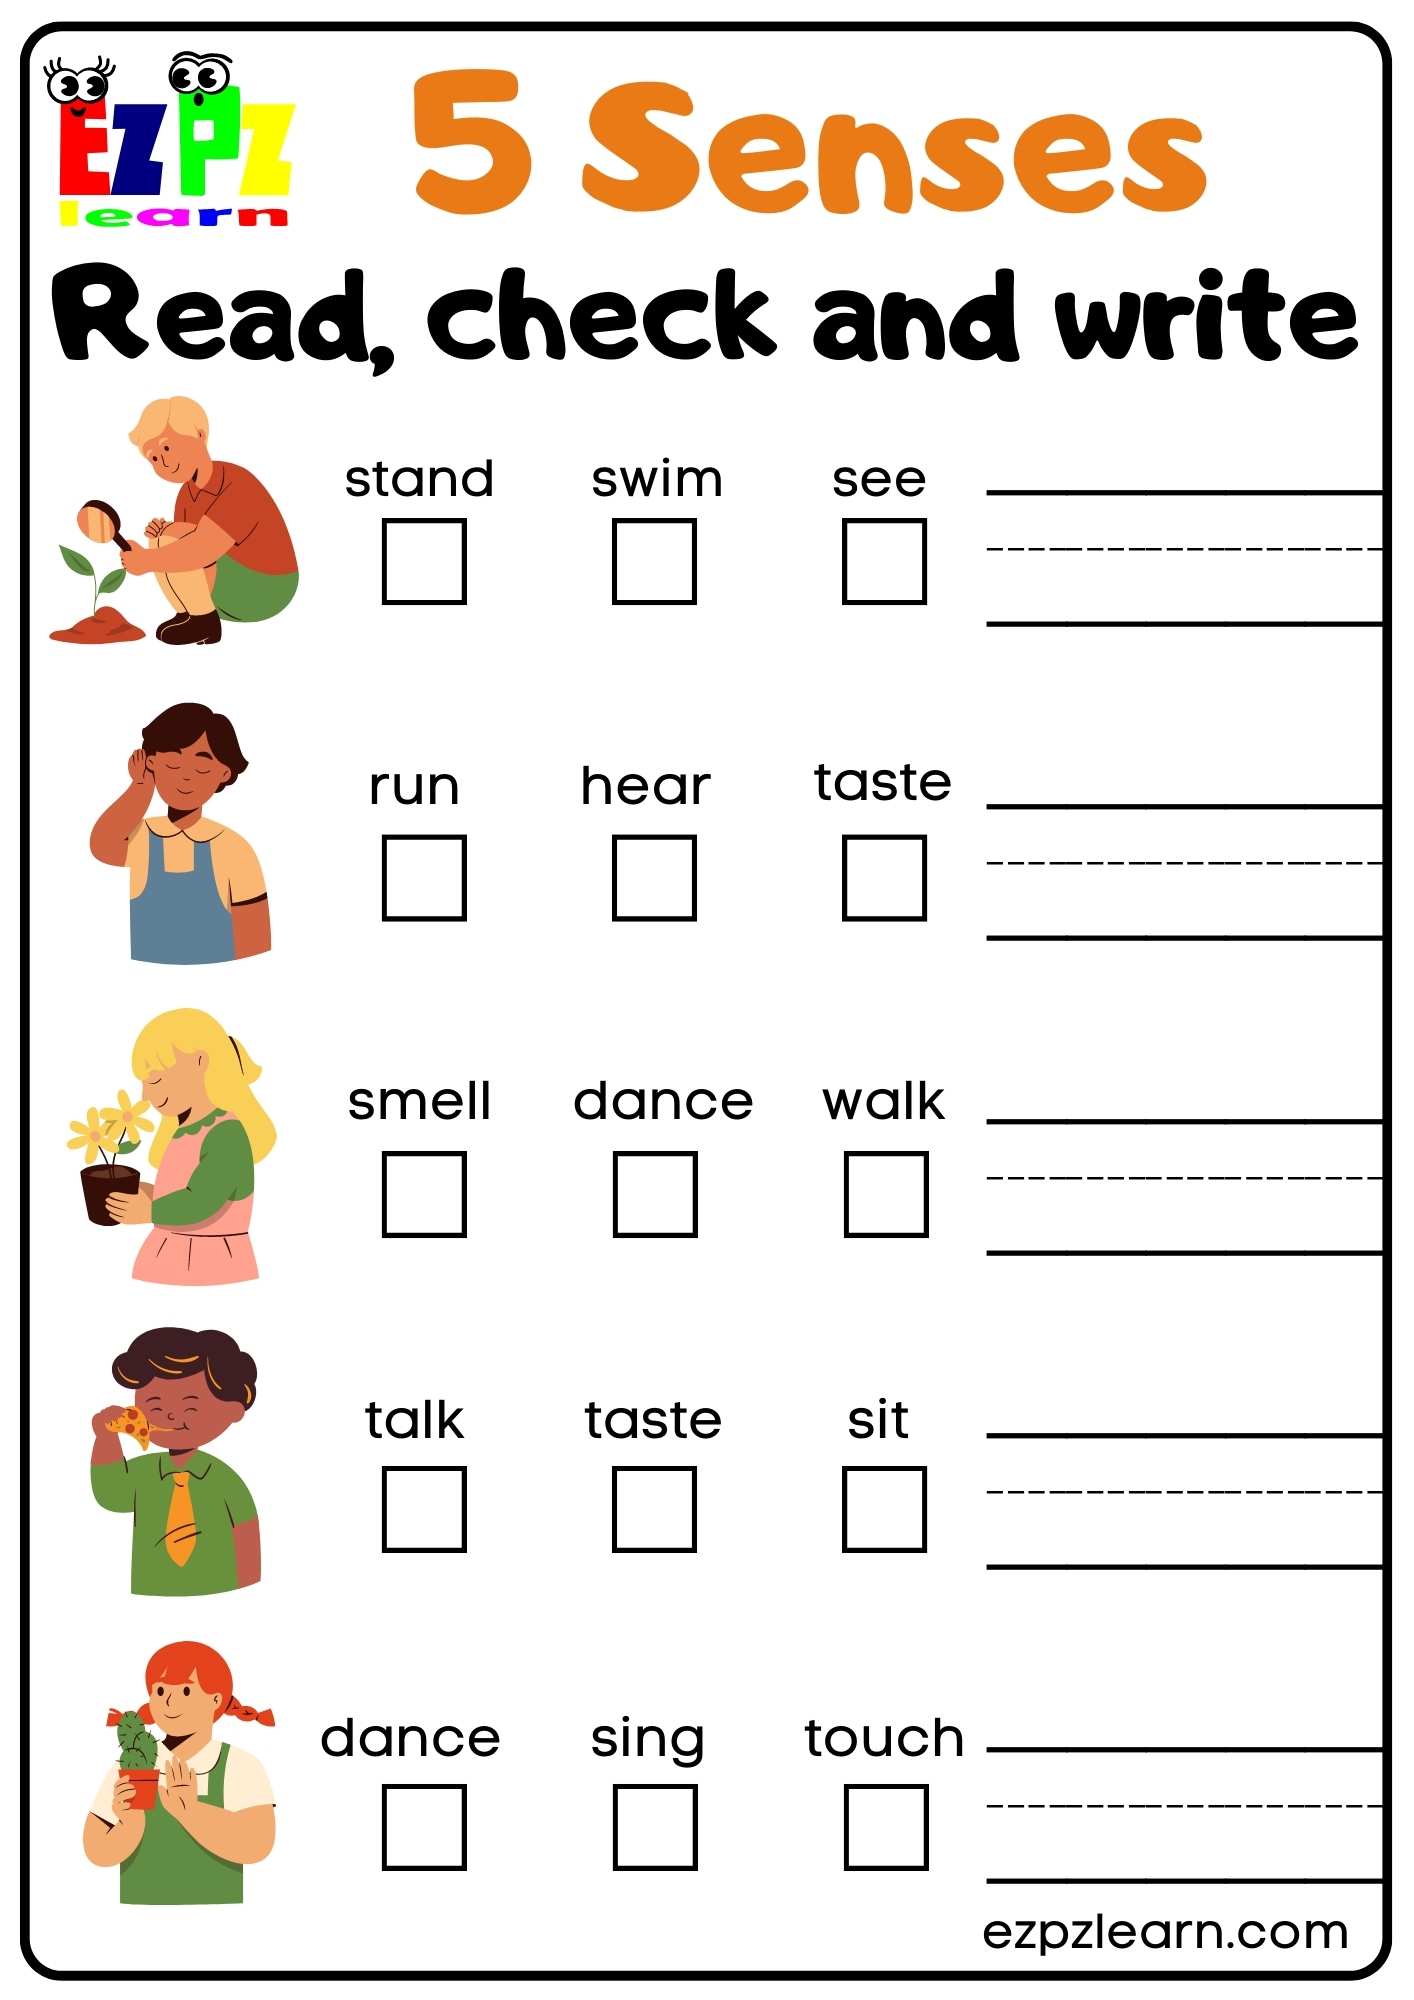 senses-worksheet-for-kindergarten-printable-kindergarten-worksheets